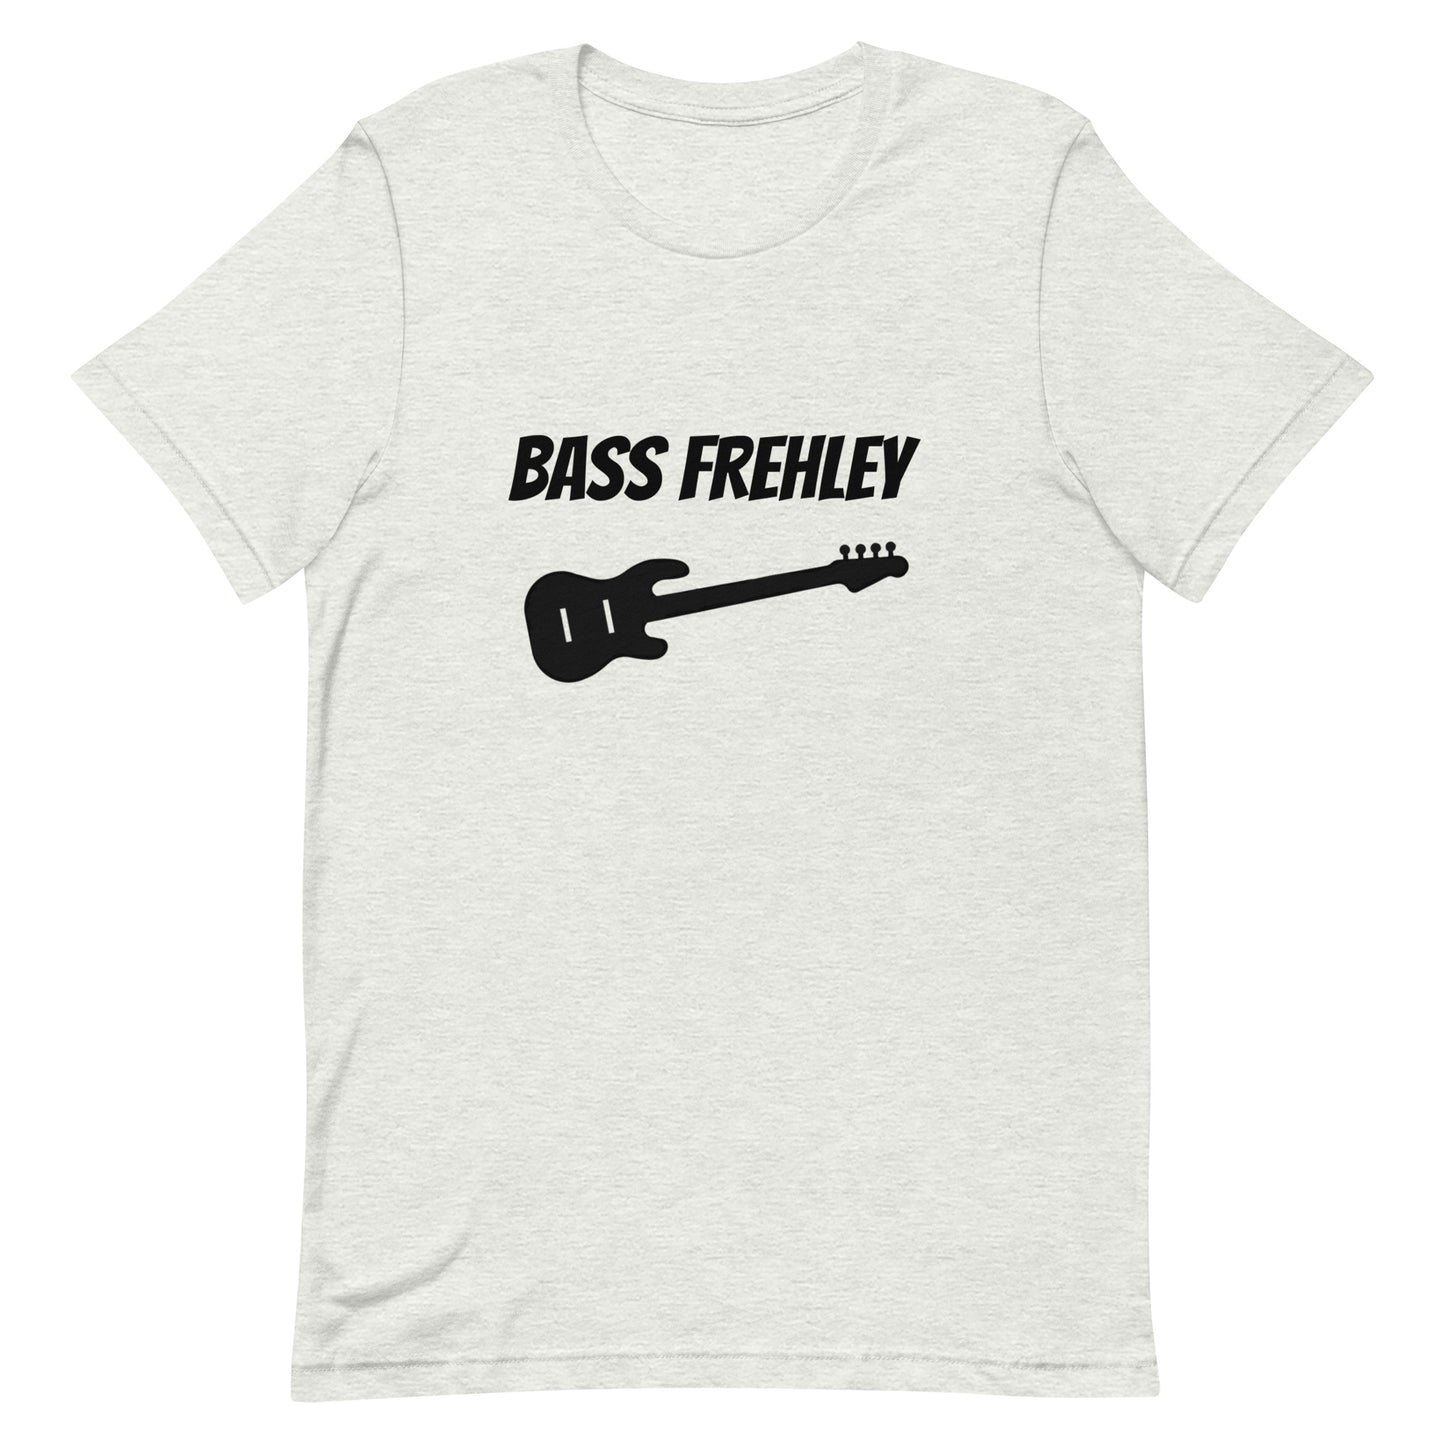 Bass Frehley